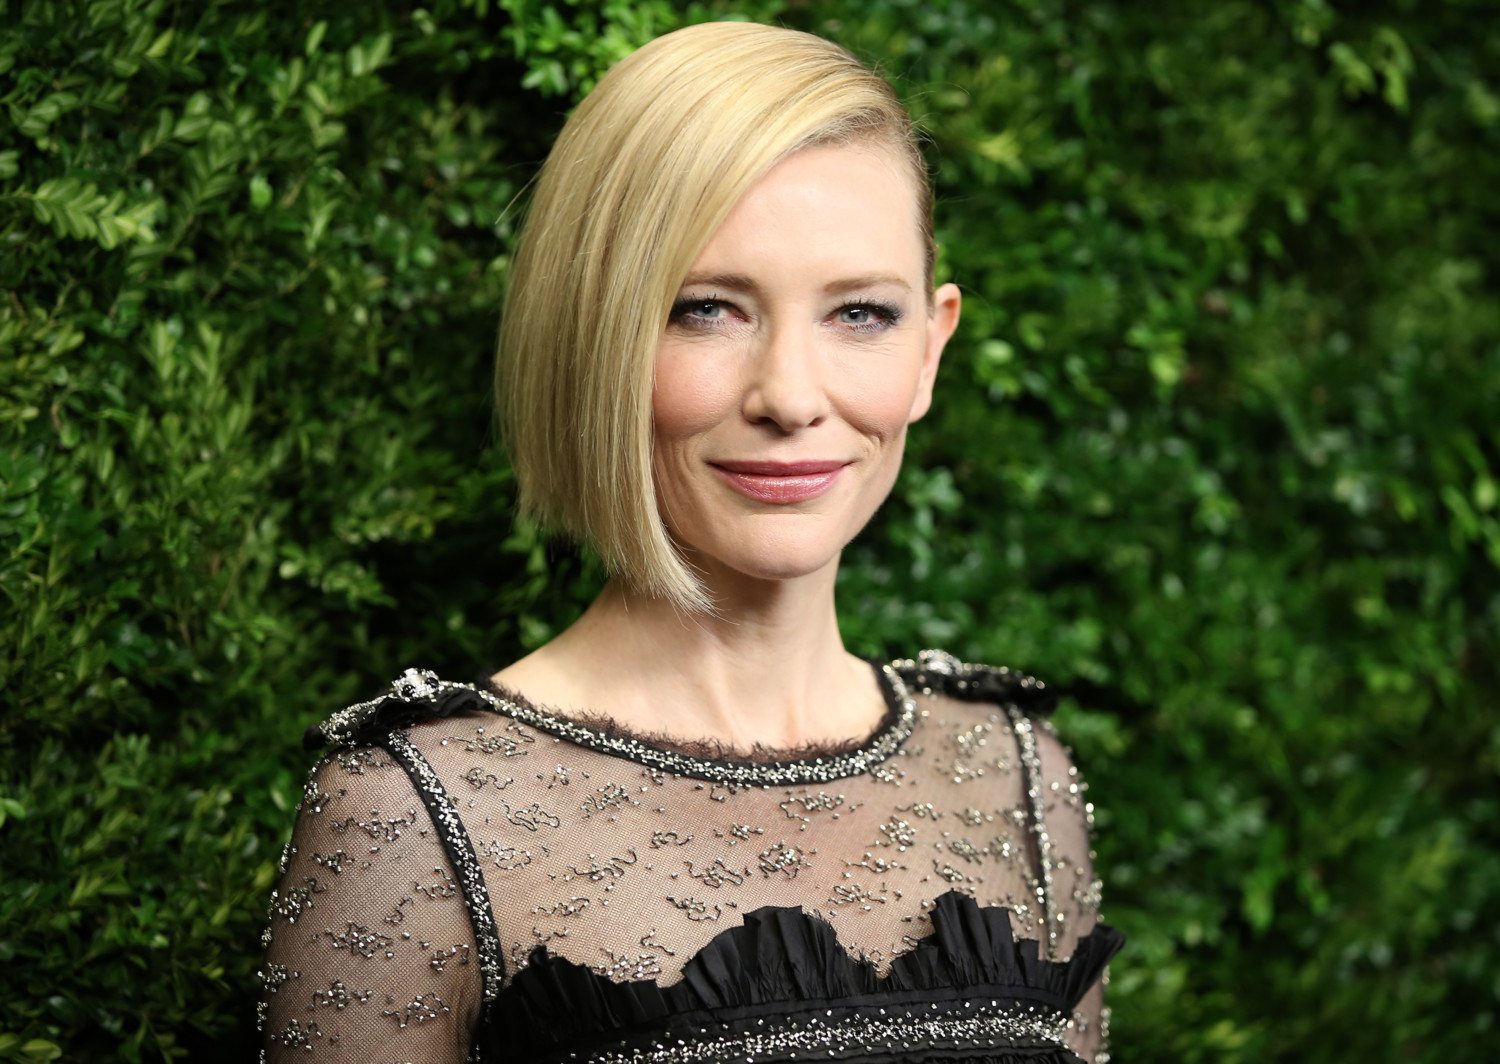 The Museum of Modern Art's 8th Annual Film Benefit Honoring Cate Blanchett